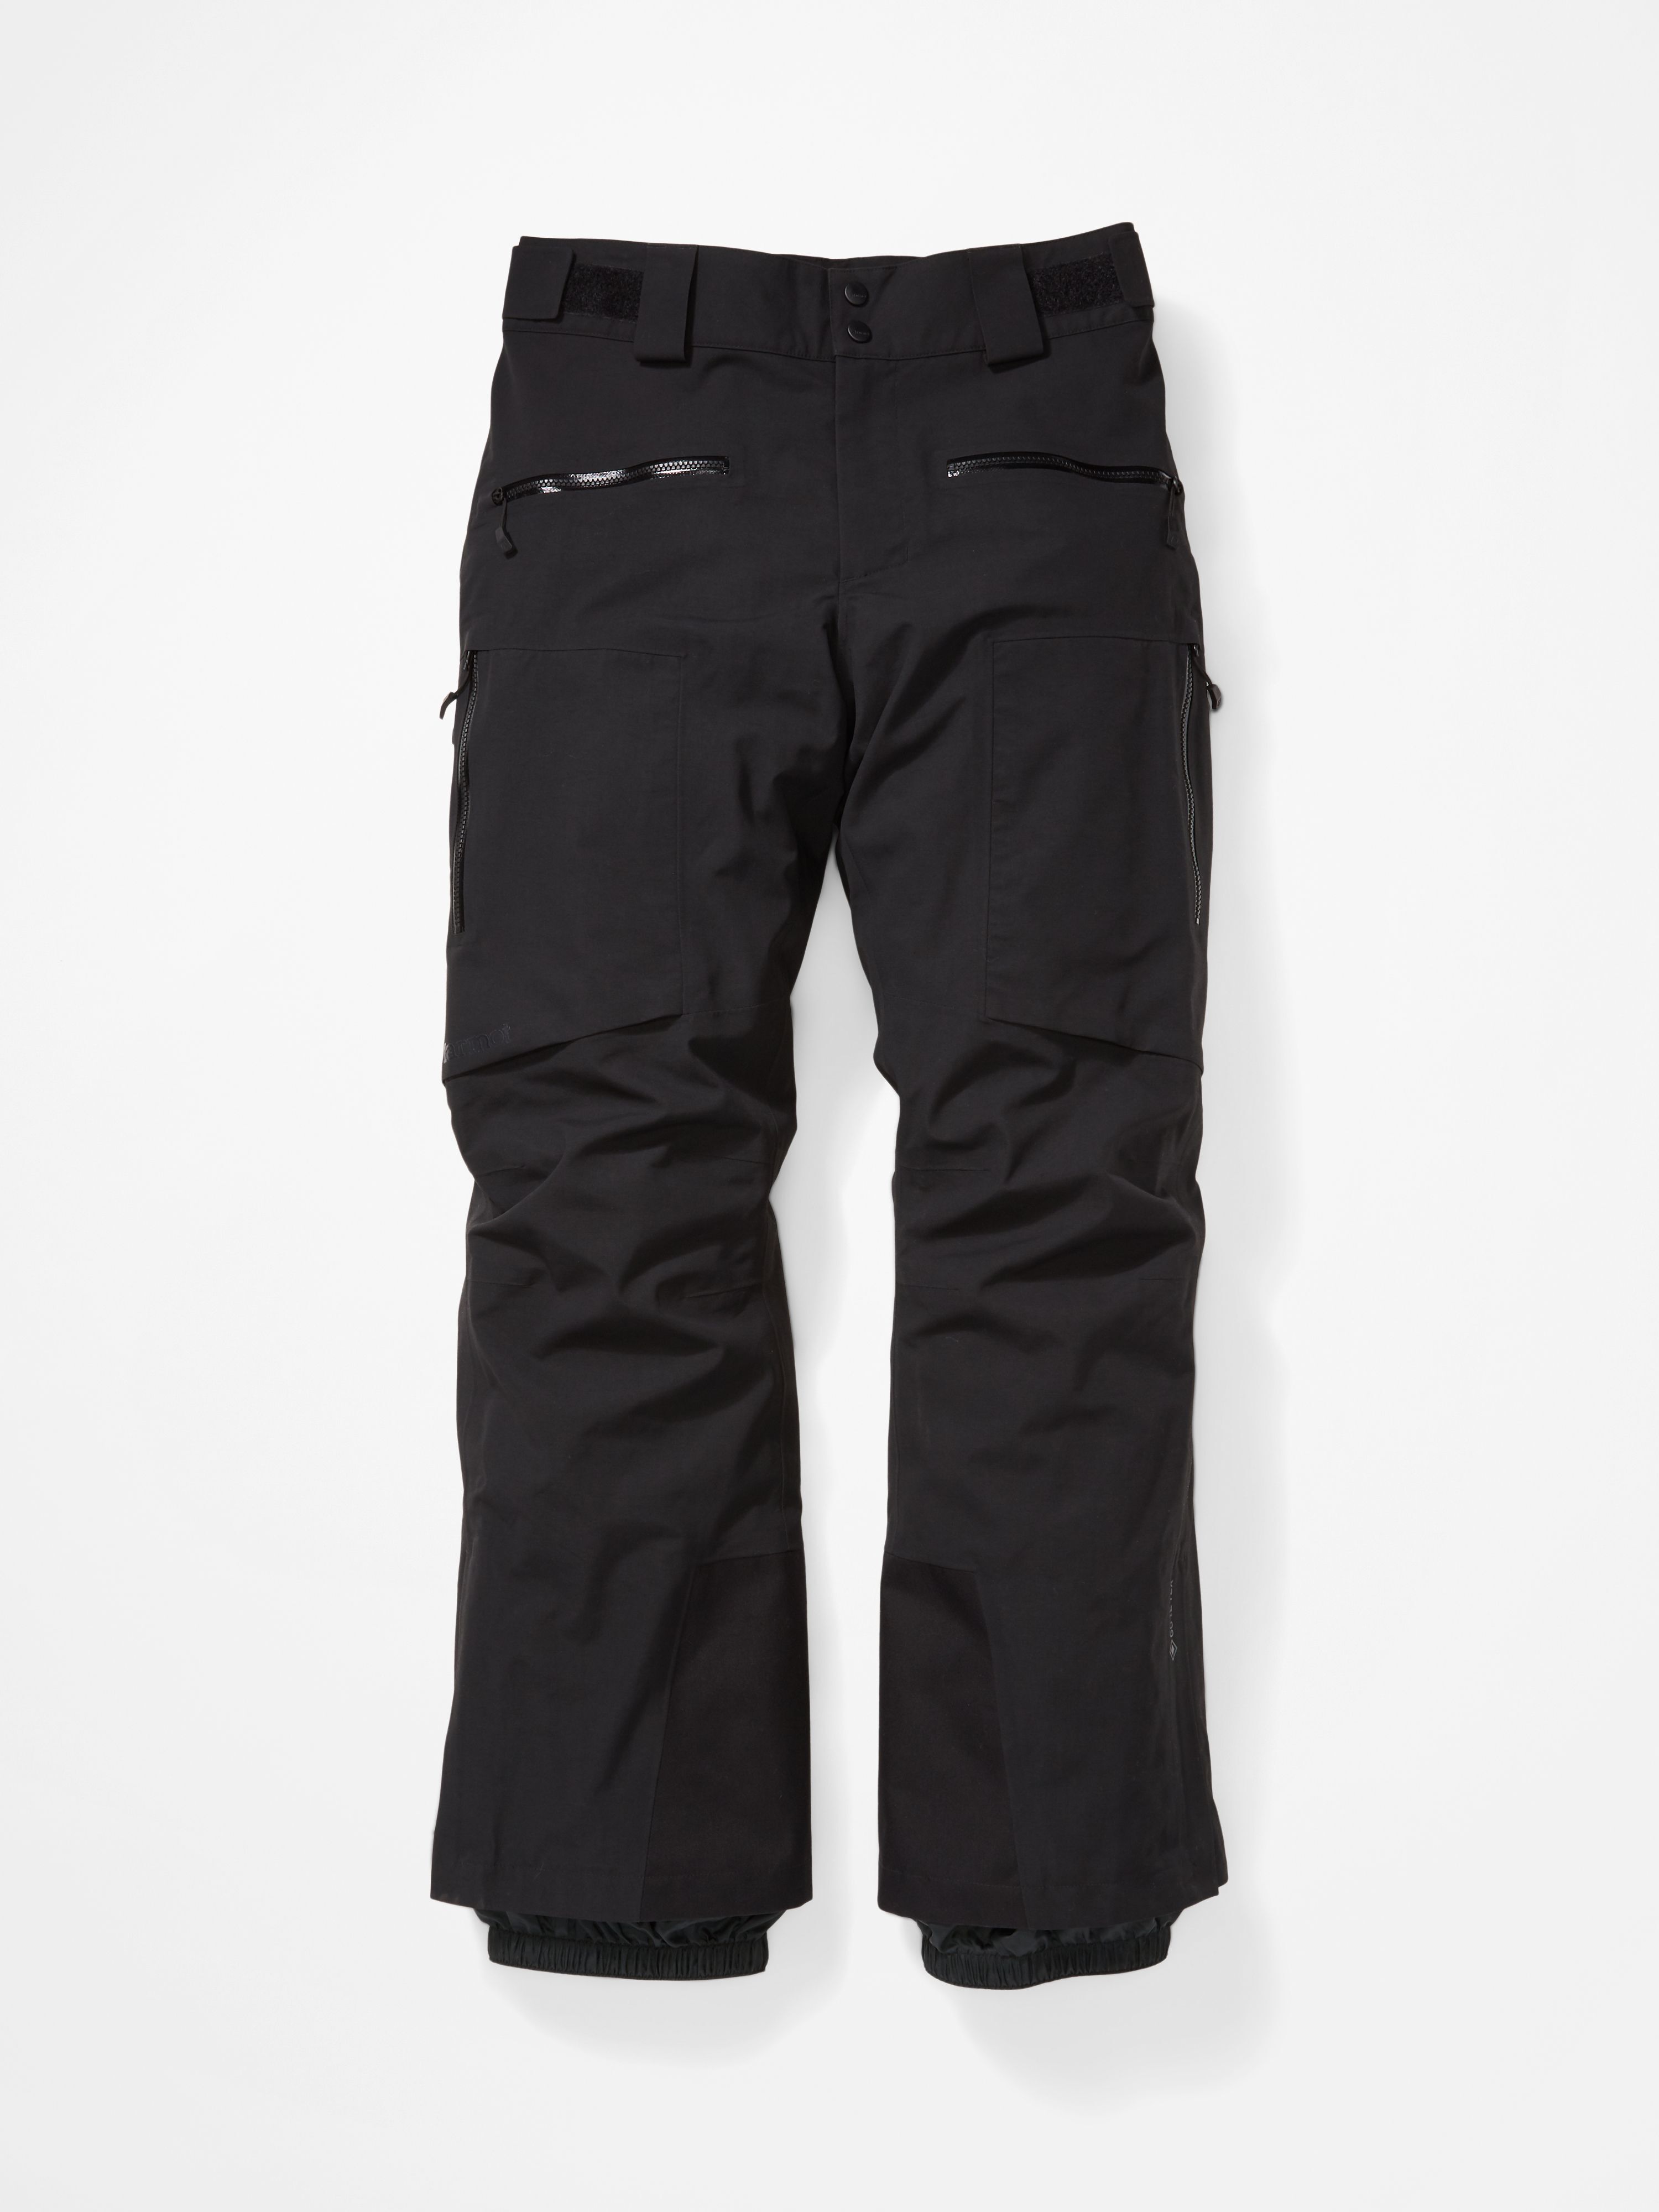 Marmot Freerider Pant - Ski pants - Men's